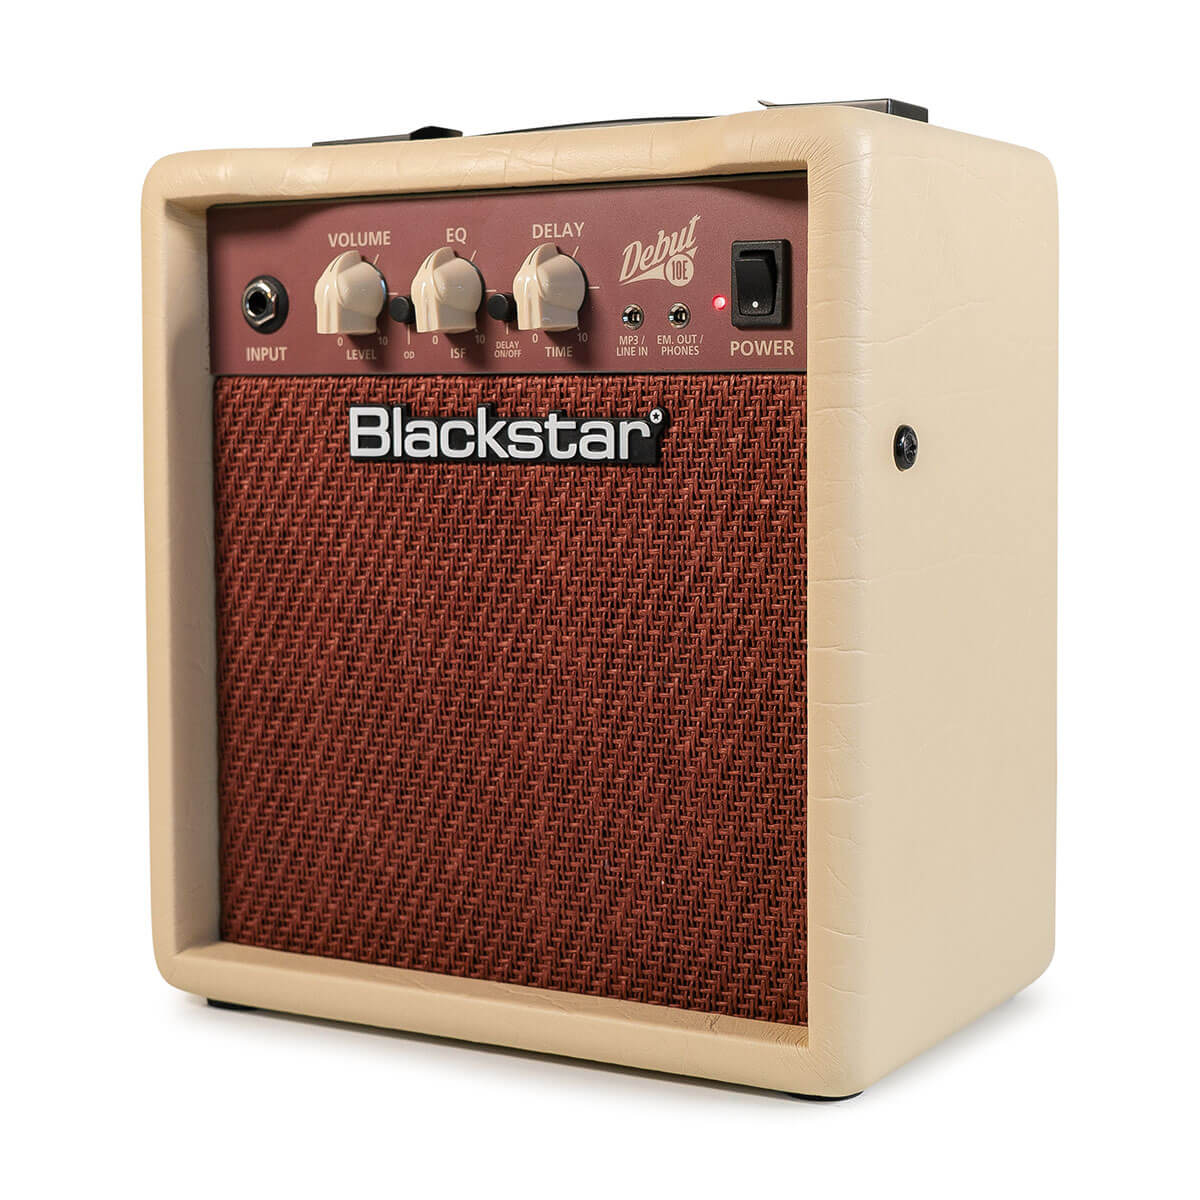 Blackstar Debut 10 Watt Guitar Amplifier Cream & Oxblood